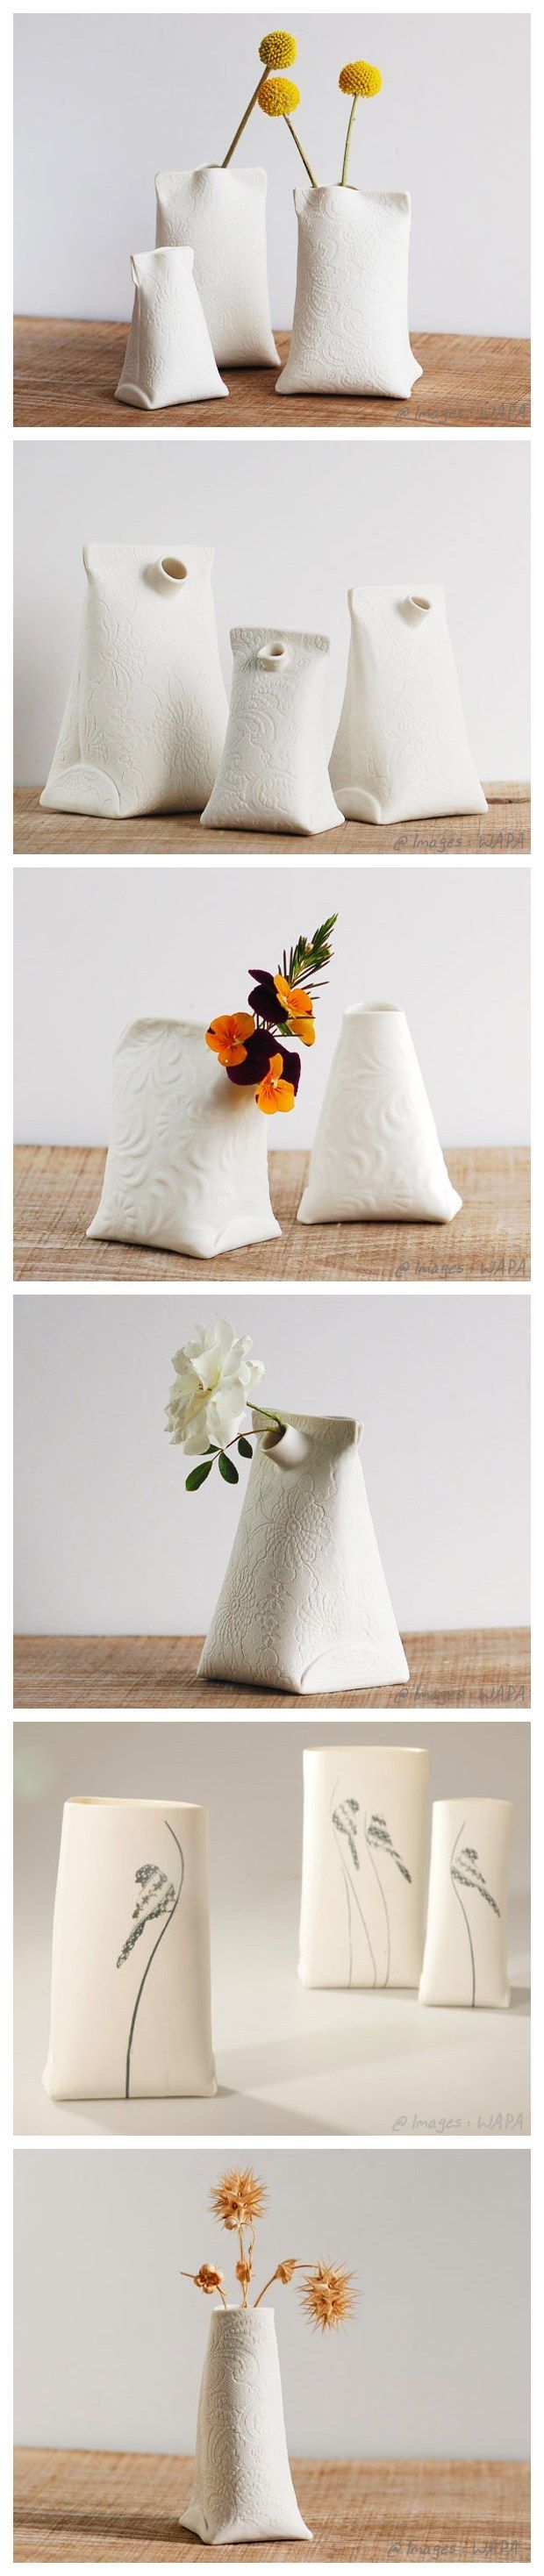 Beautiful Artisan Porcelain Vases!